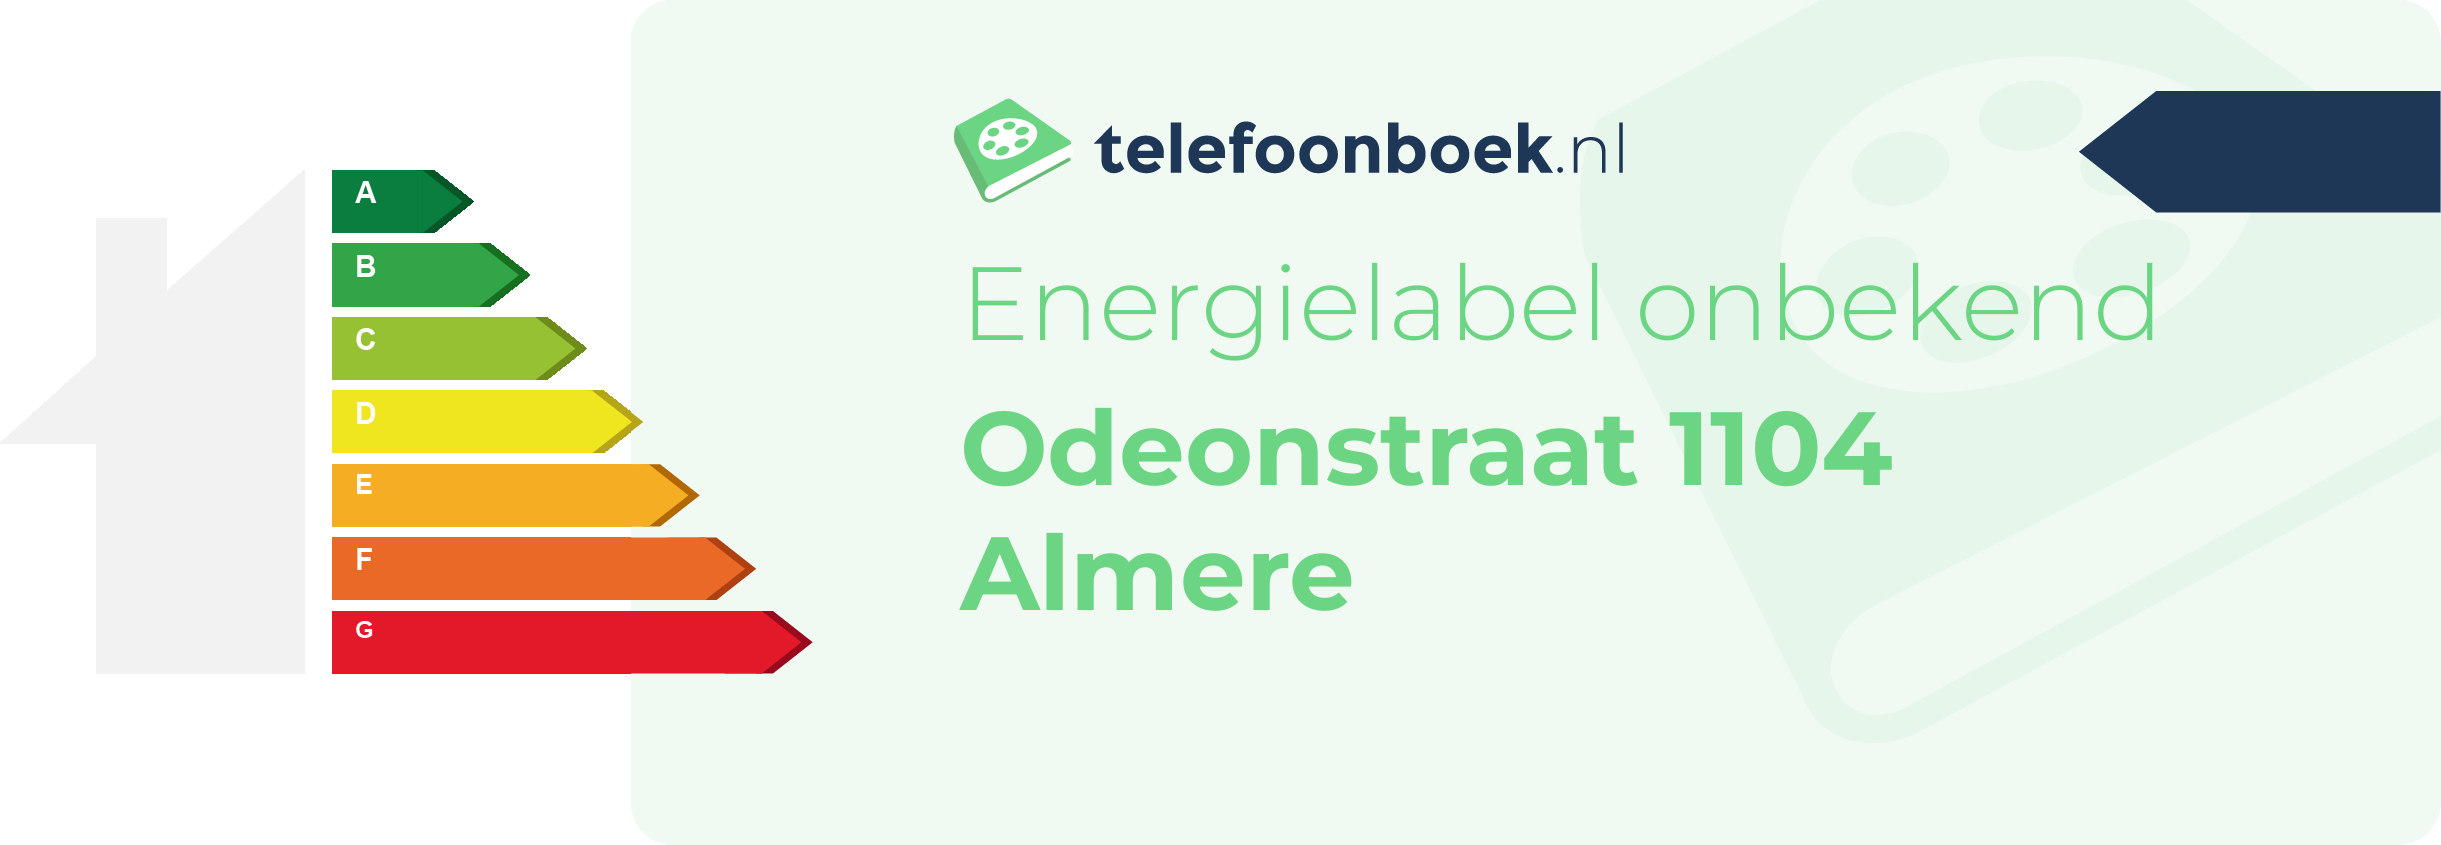 Energielabel Odeonstraat 1104 Almere